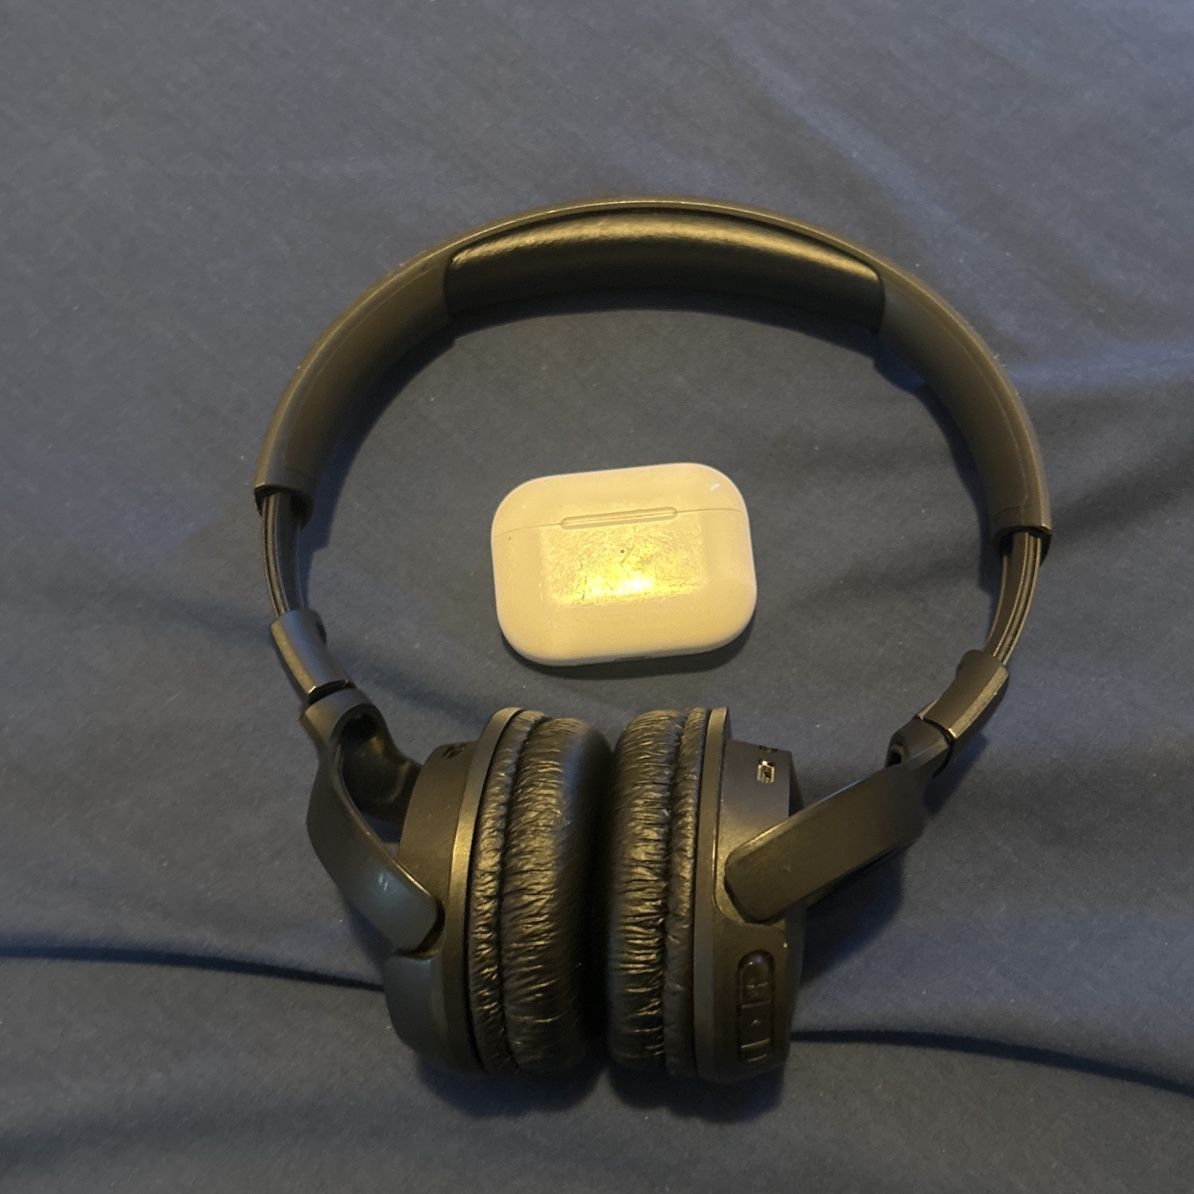 Jbl Headphones, AirPods Pro’s